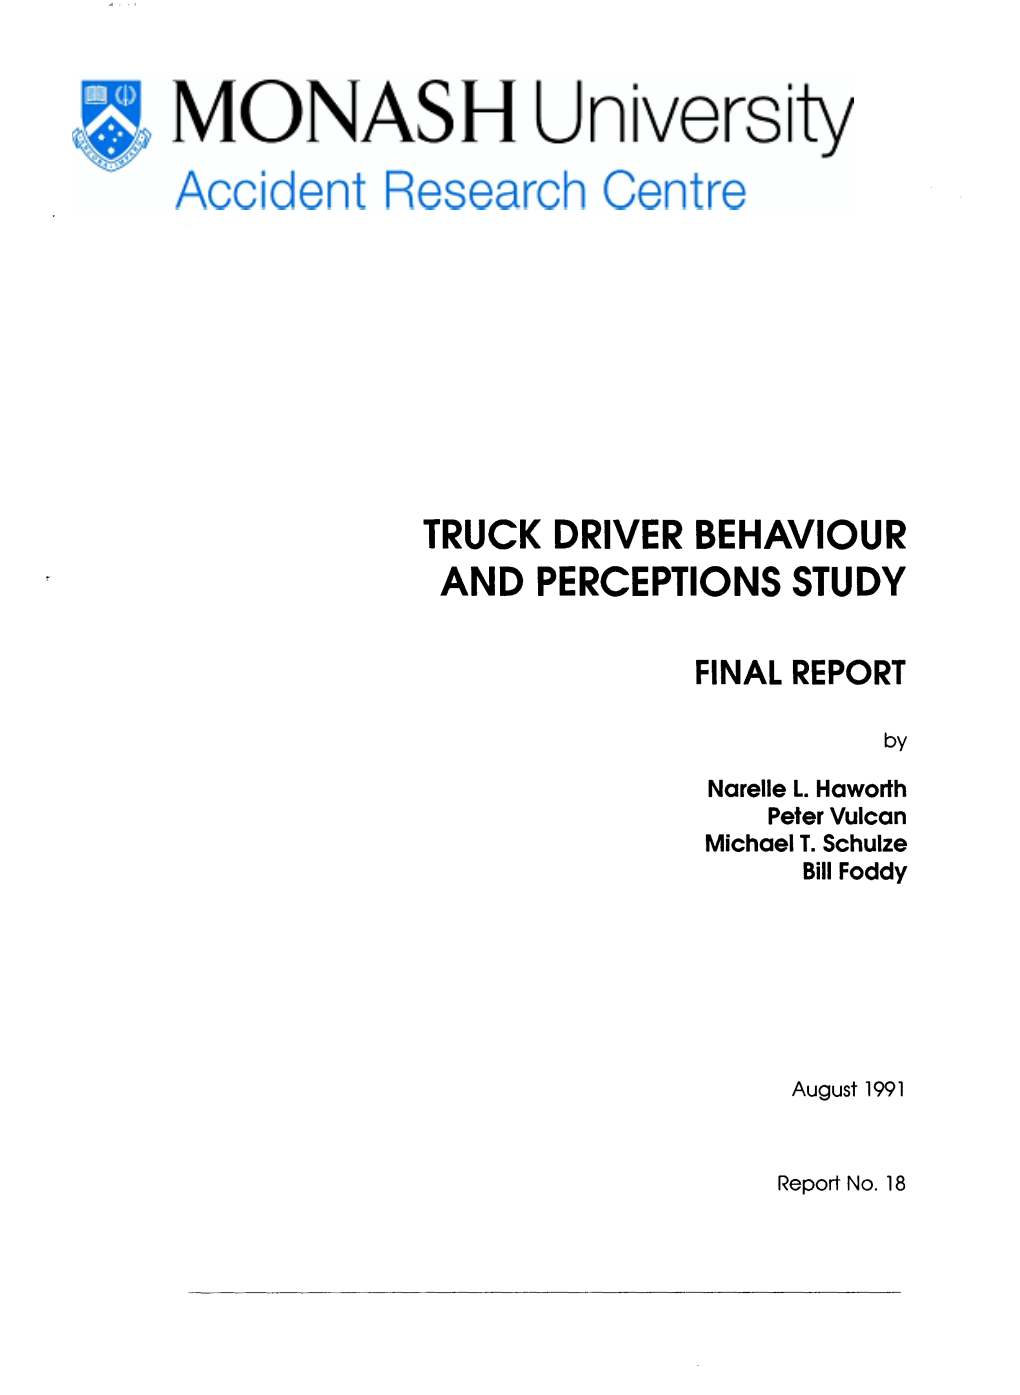 Truck Driver Behaviour and Perceptions Study